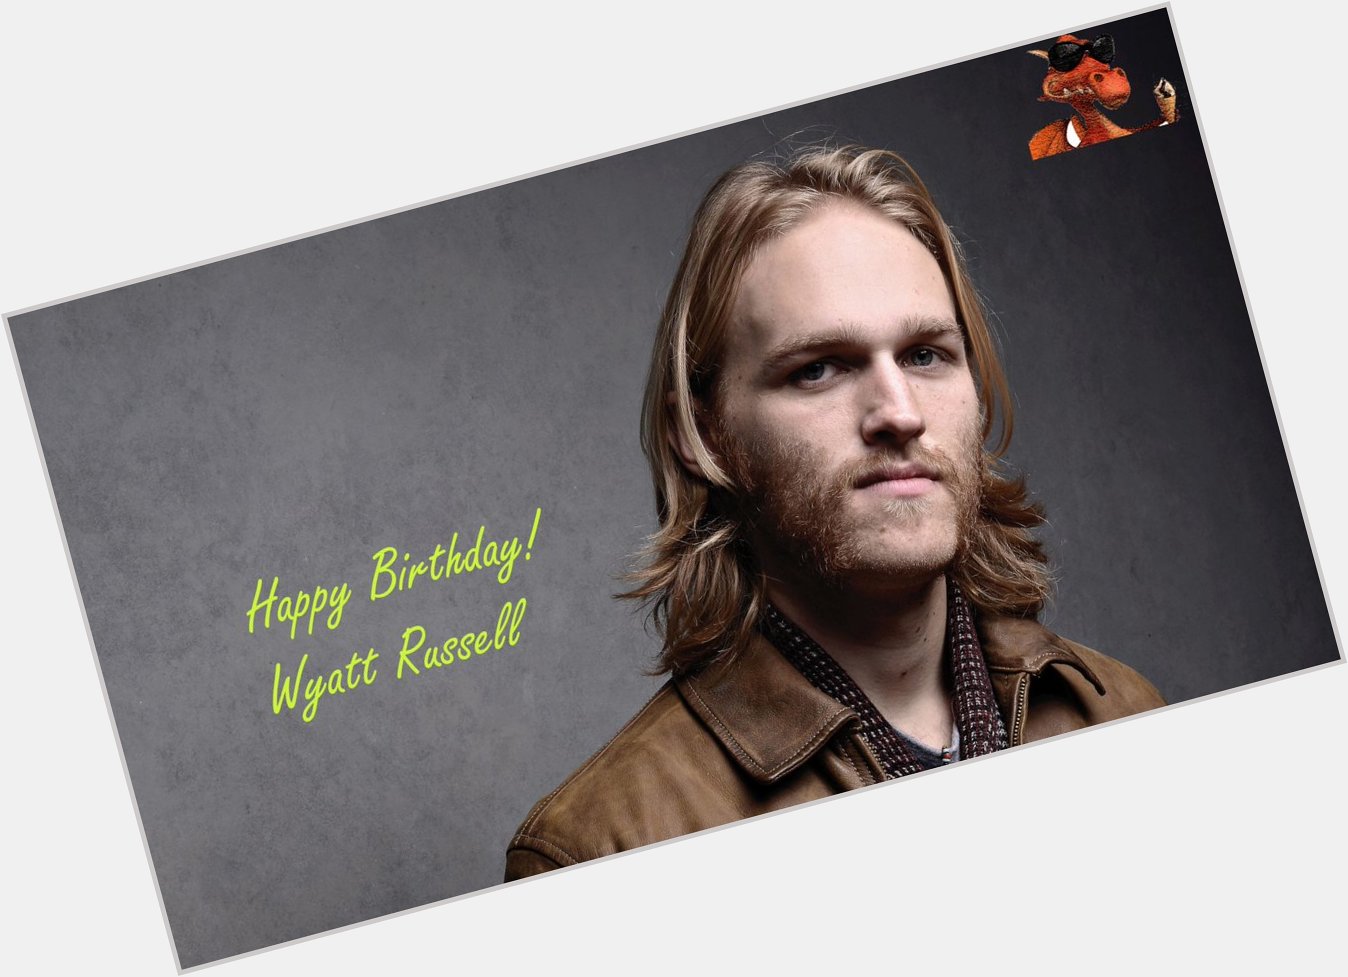  wishes Wyatt Russell a Happy Birthday    